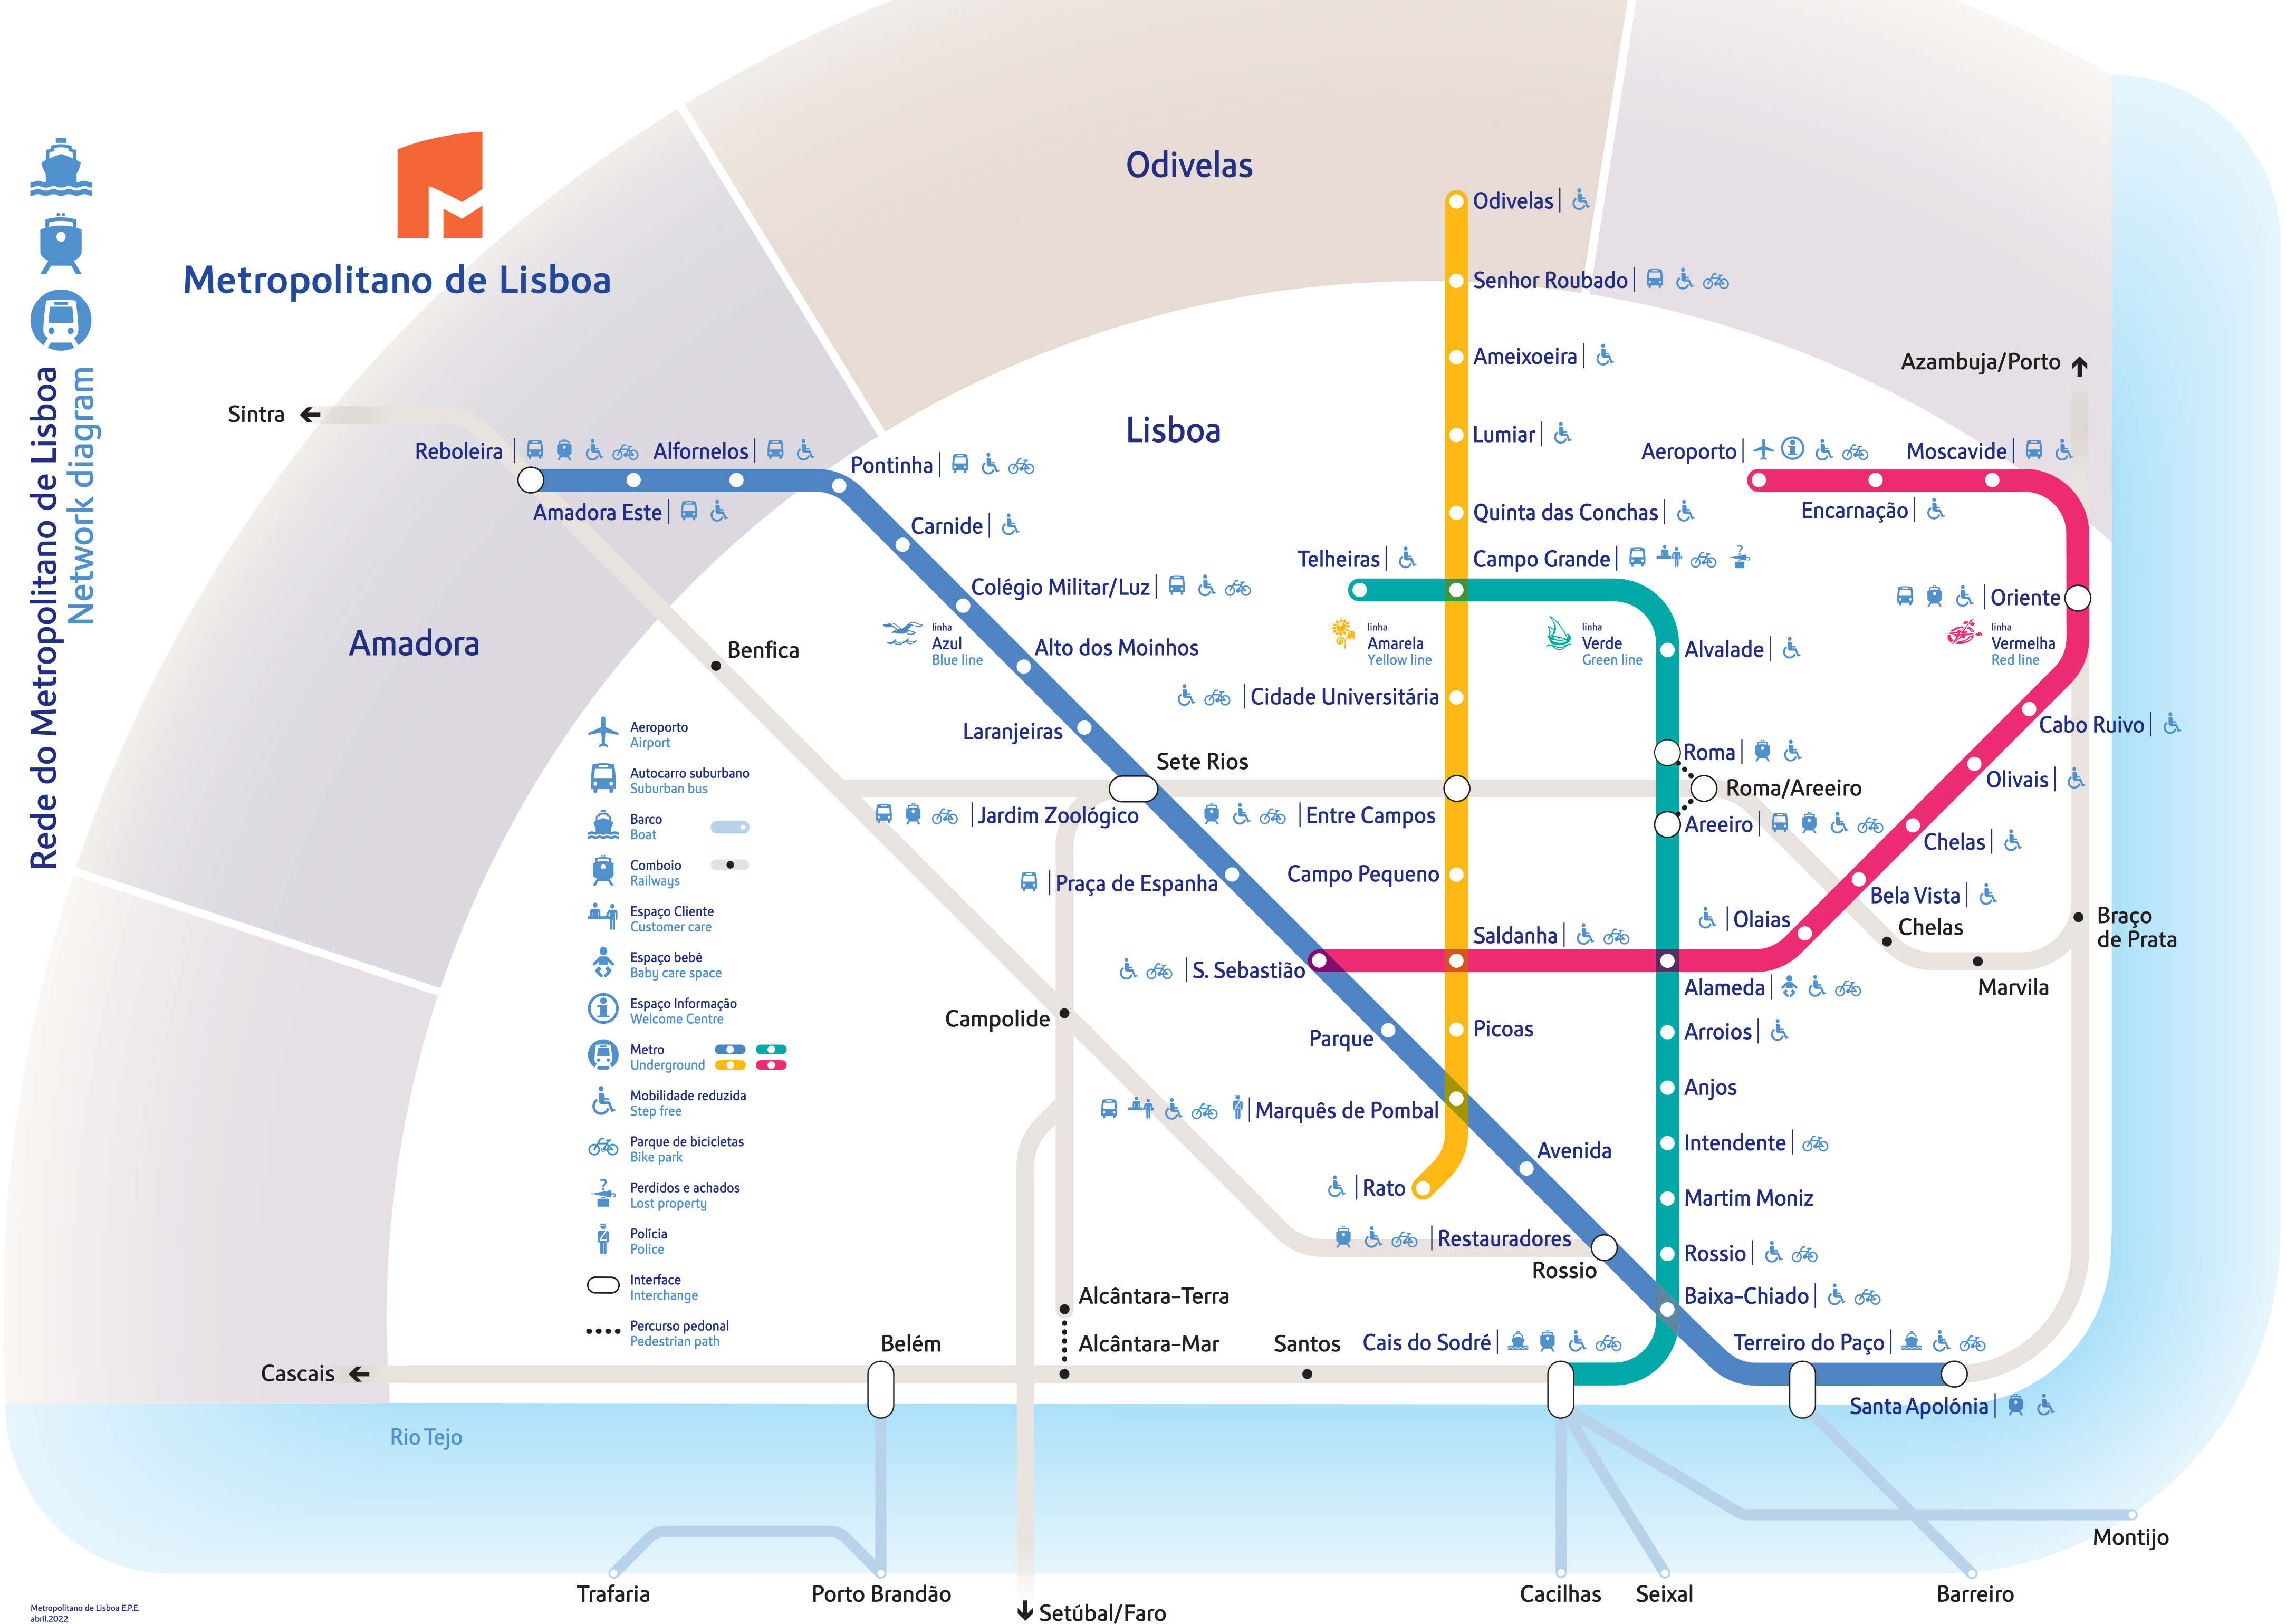 Lisbon Metro network diagram